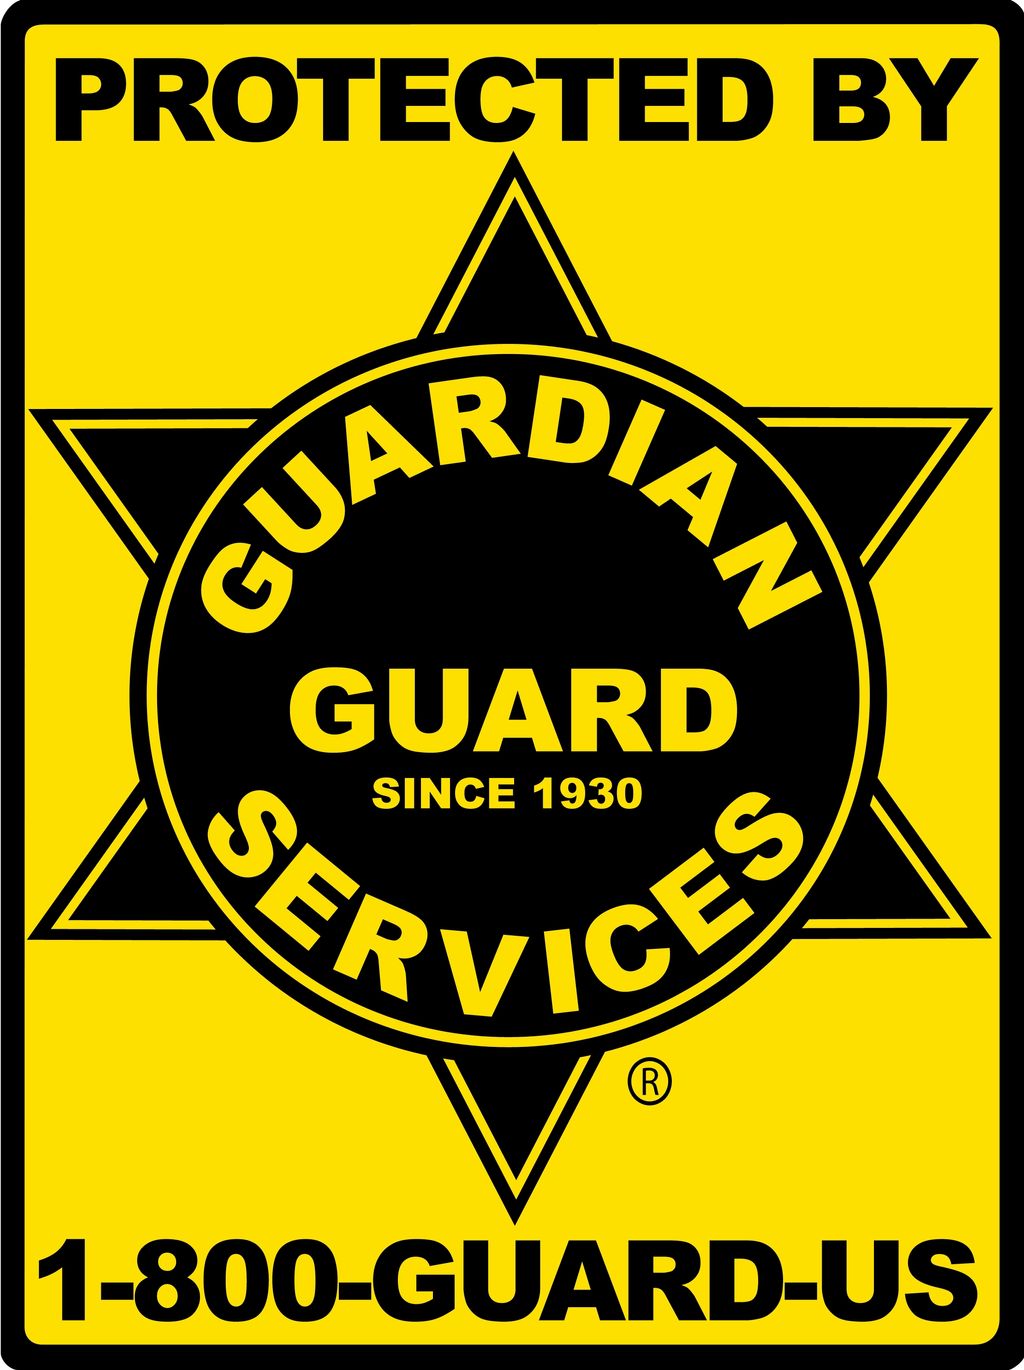 Guardian Guard Services, Inc.